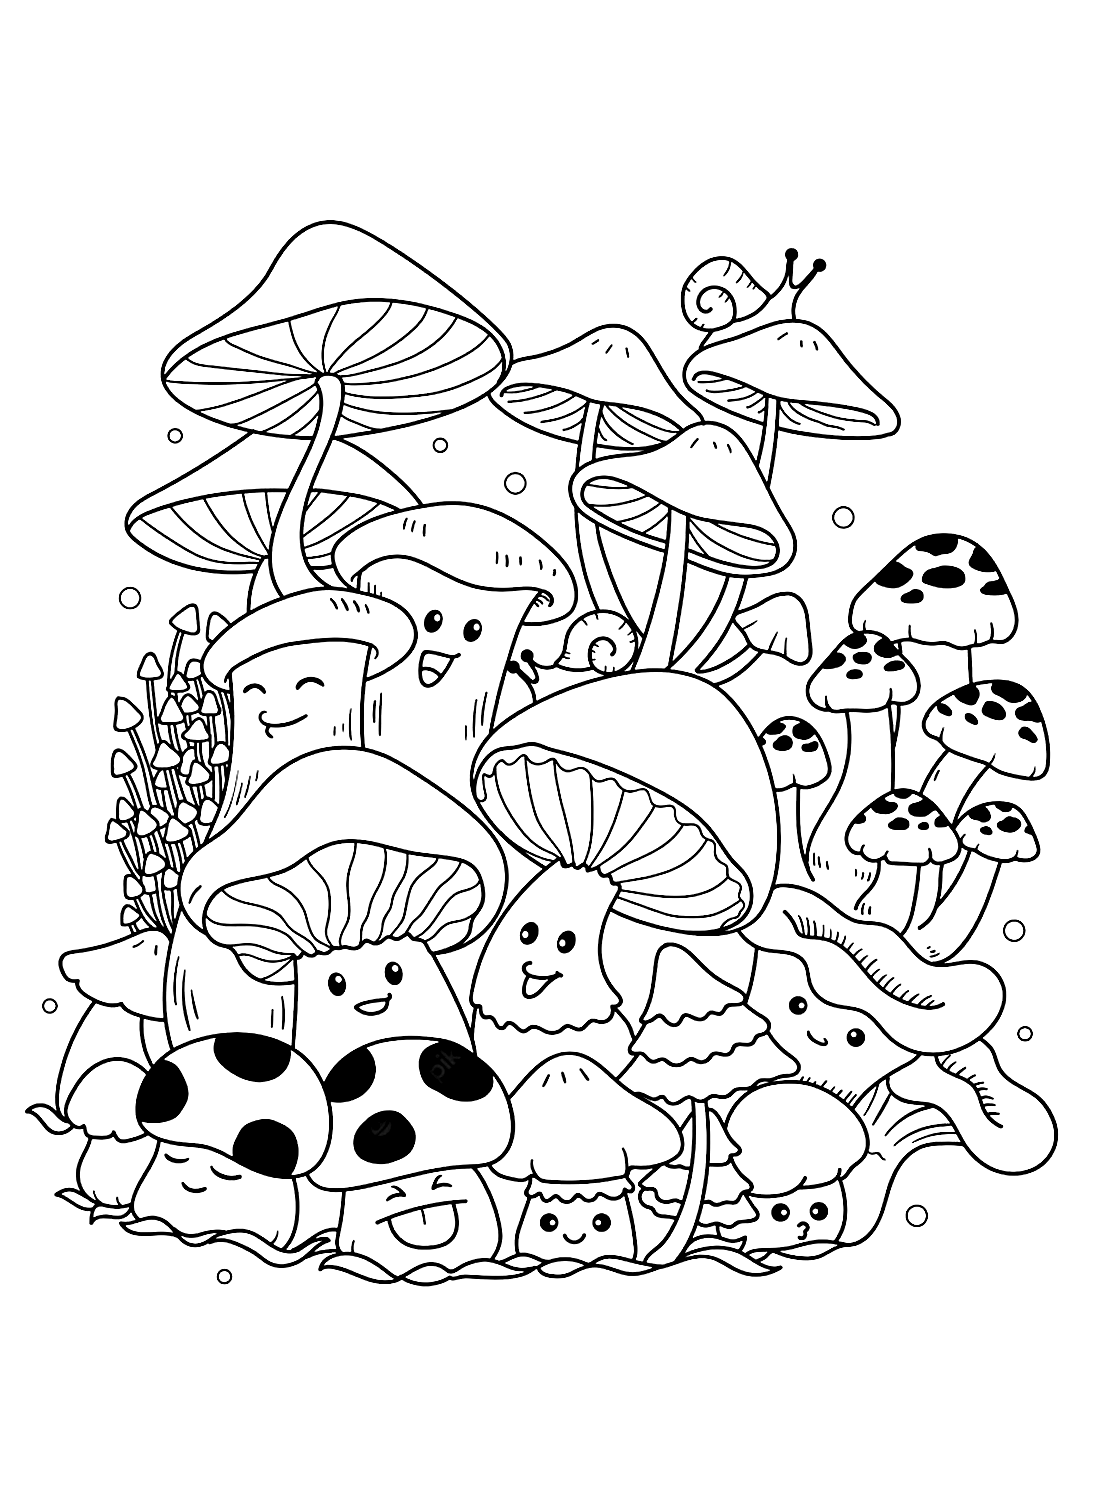 Imprimibles divertidos de Hongos de Mushroom